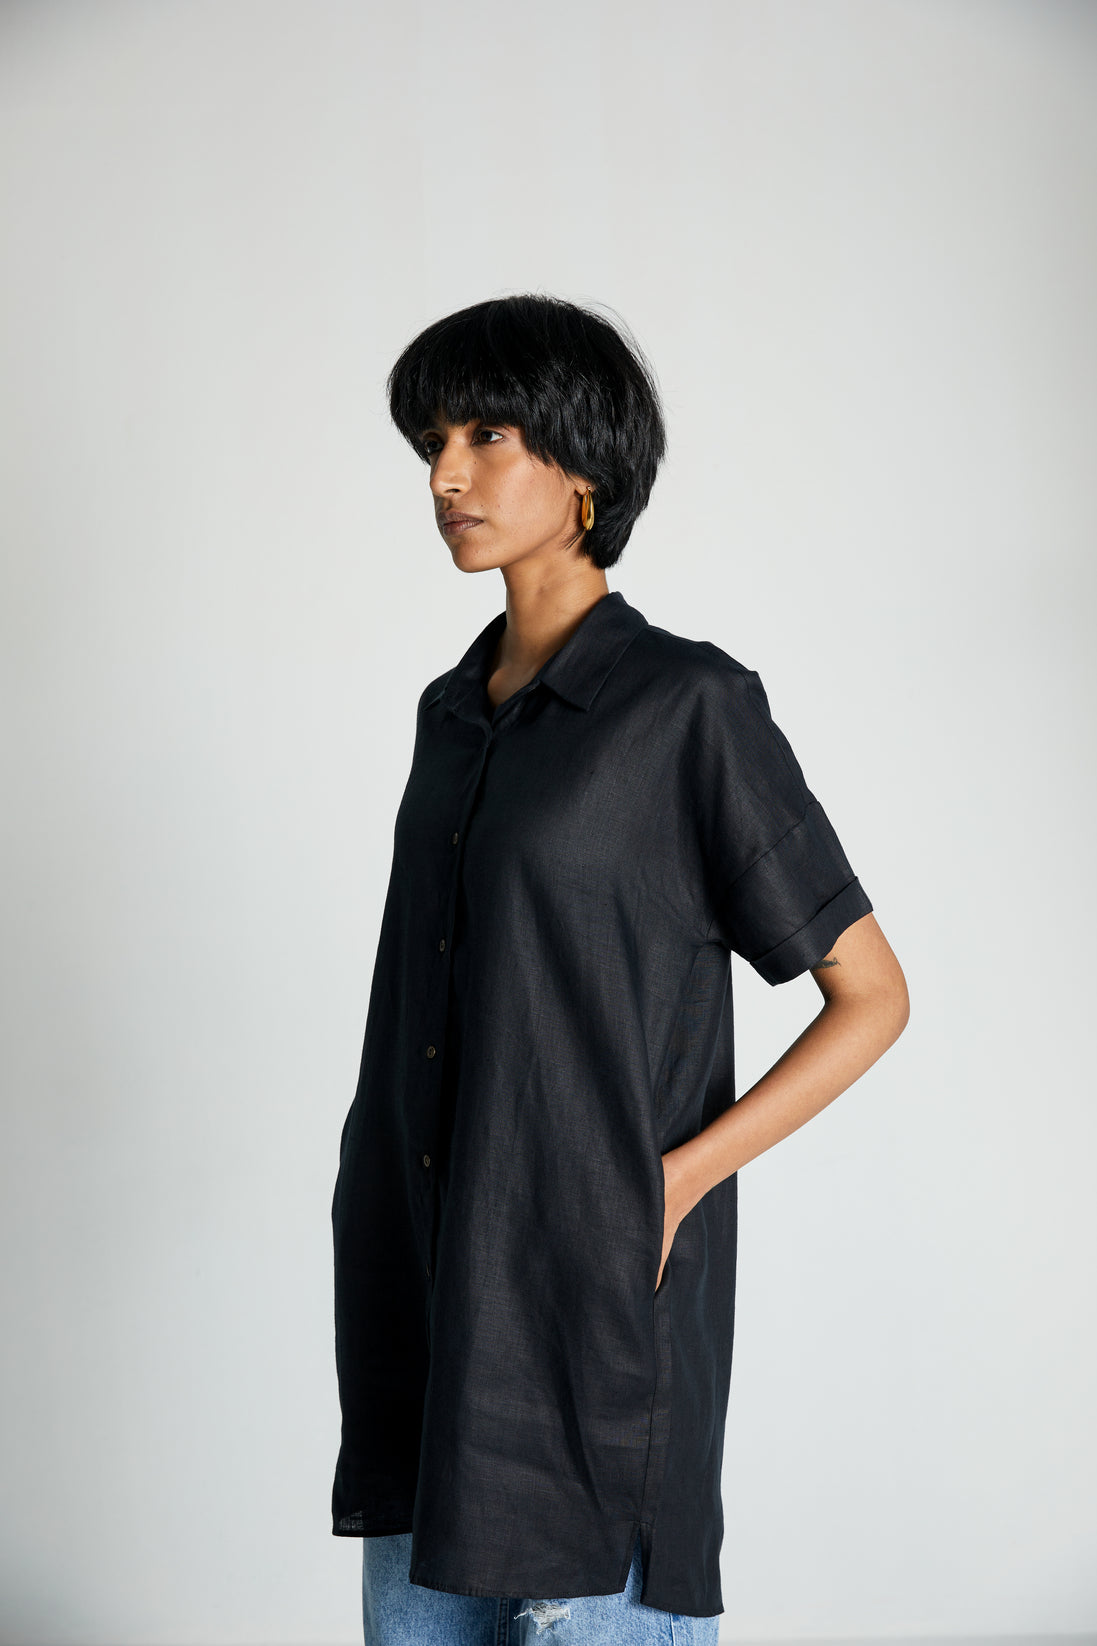 The Everyday Shirt at Kamakhyaa by Reistor. This item is Black, Hemp, Natural, Noir, Office Wear, Regular Fit, Shirts, Solids, Tops, Womenswear